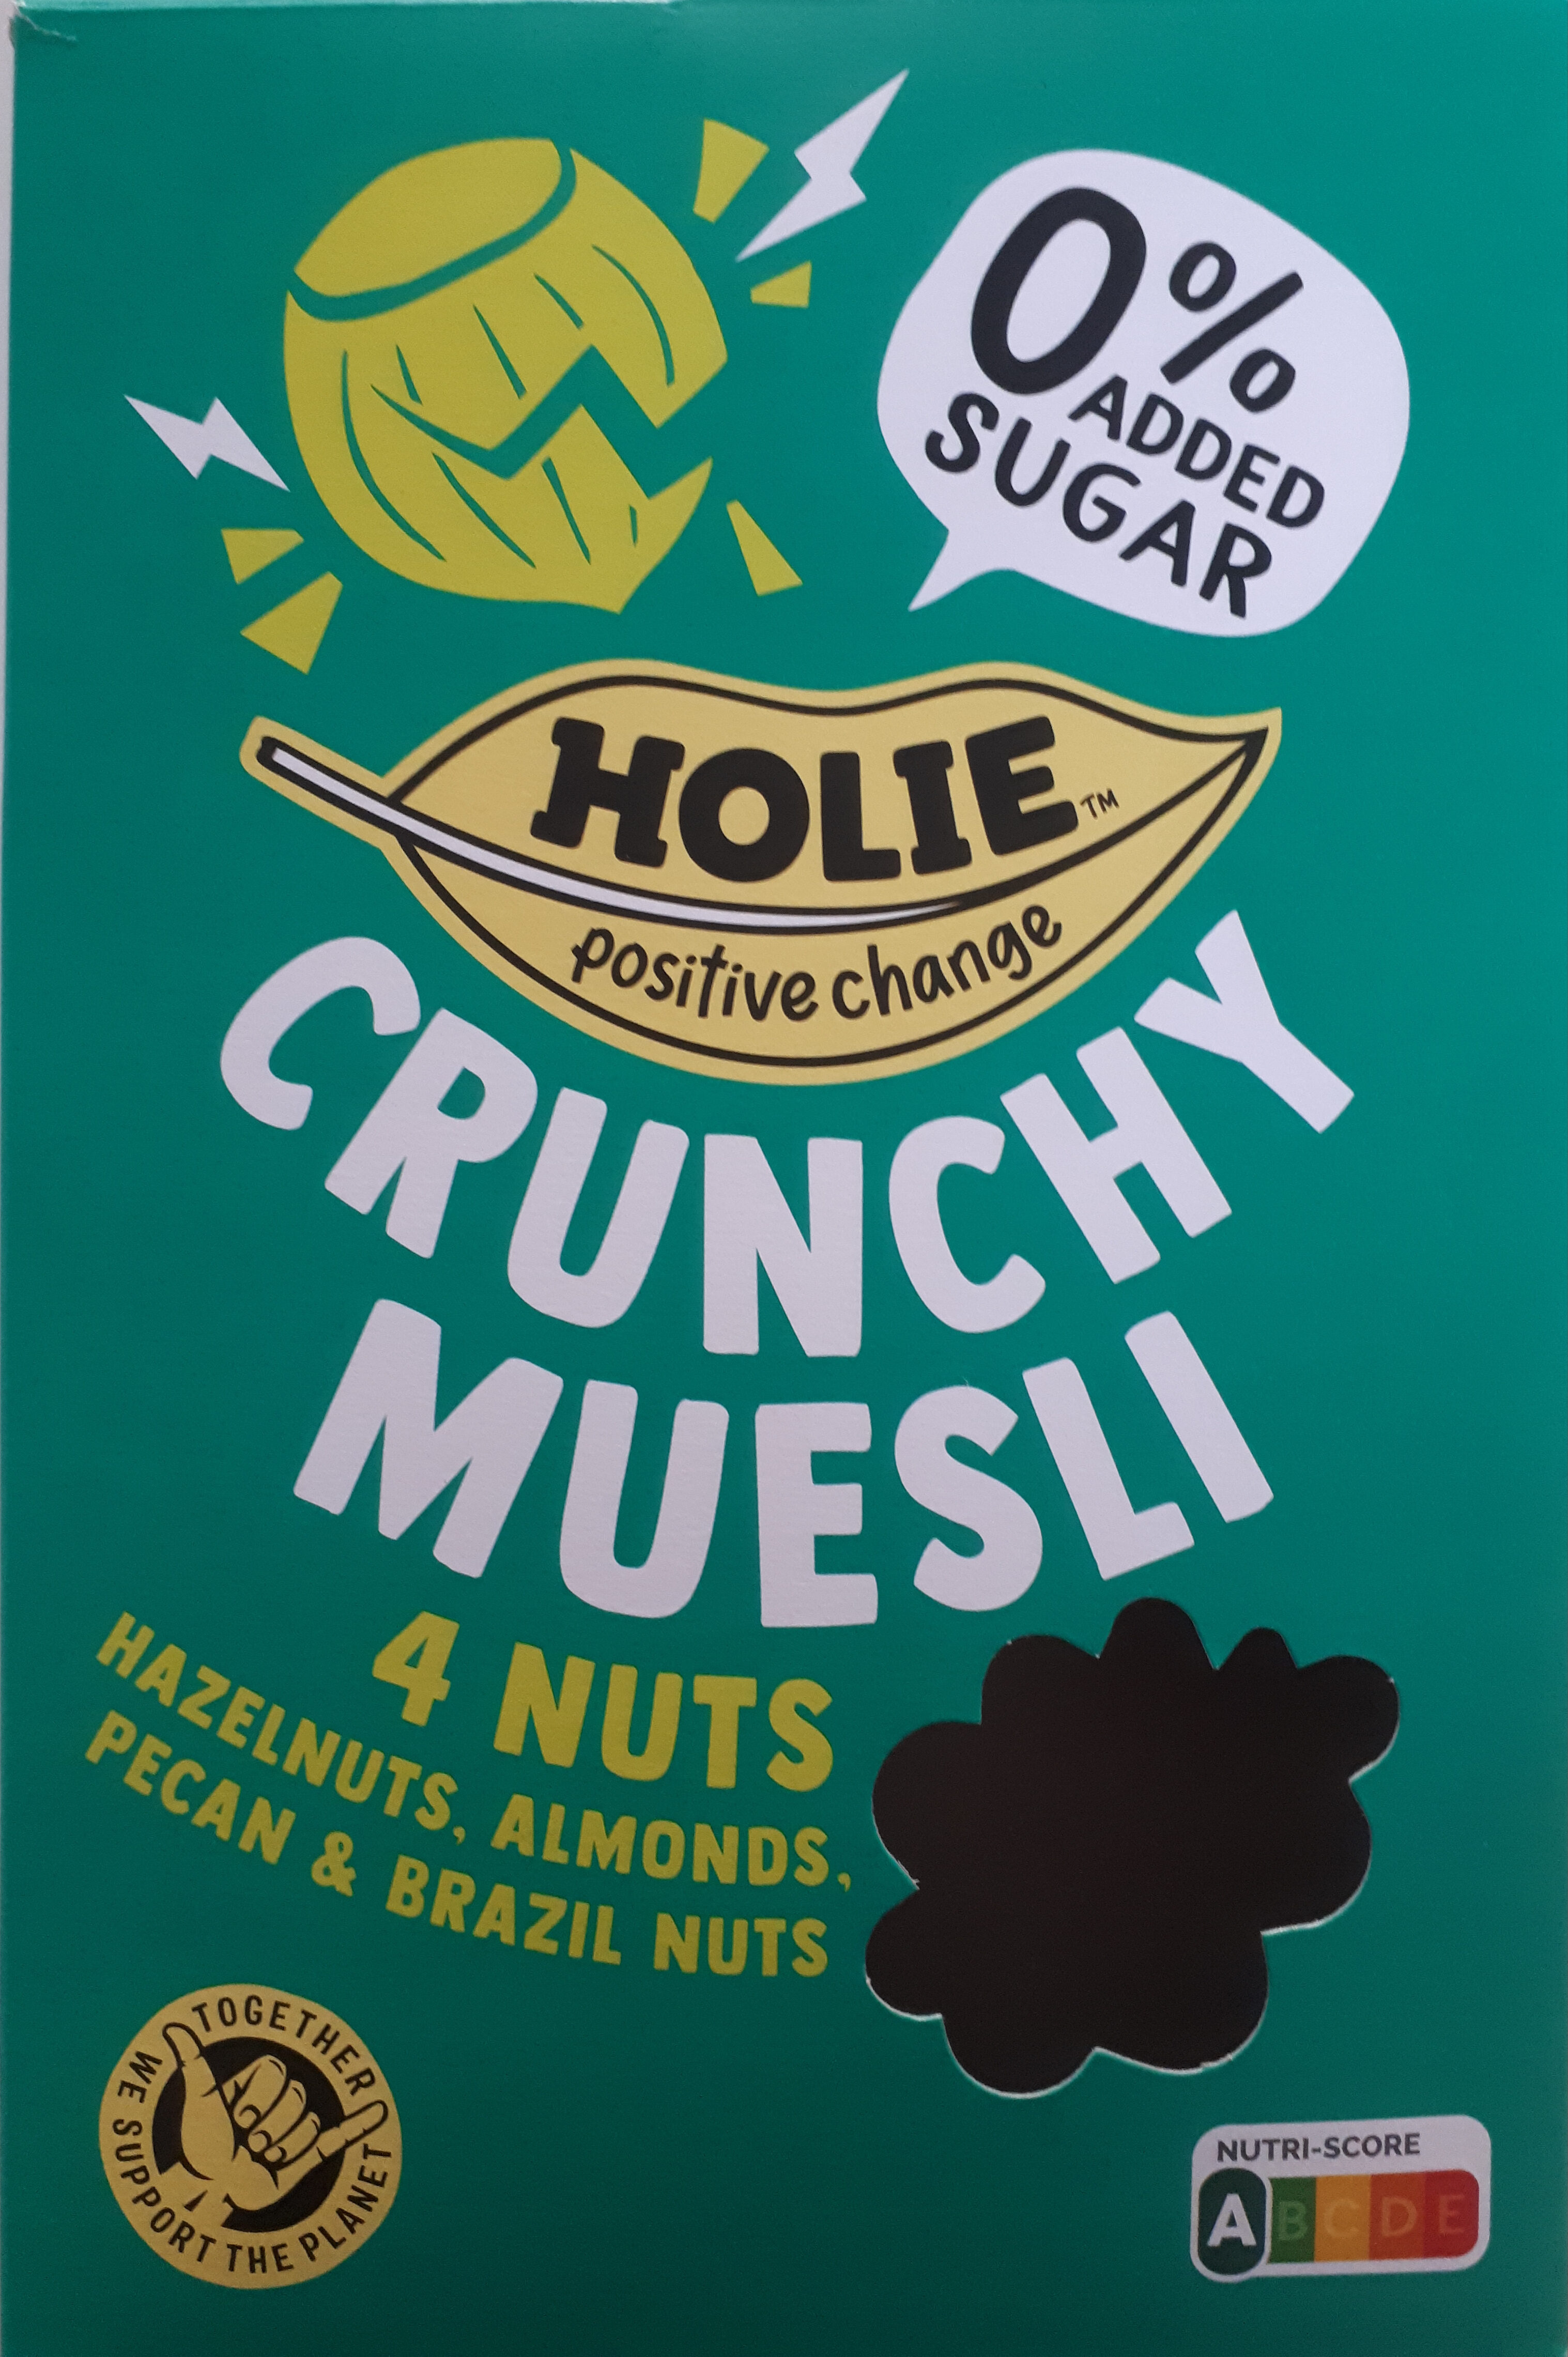 CRUNCHY MUESLI 4 NUTS - Product